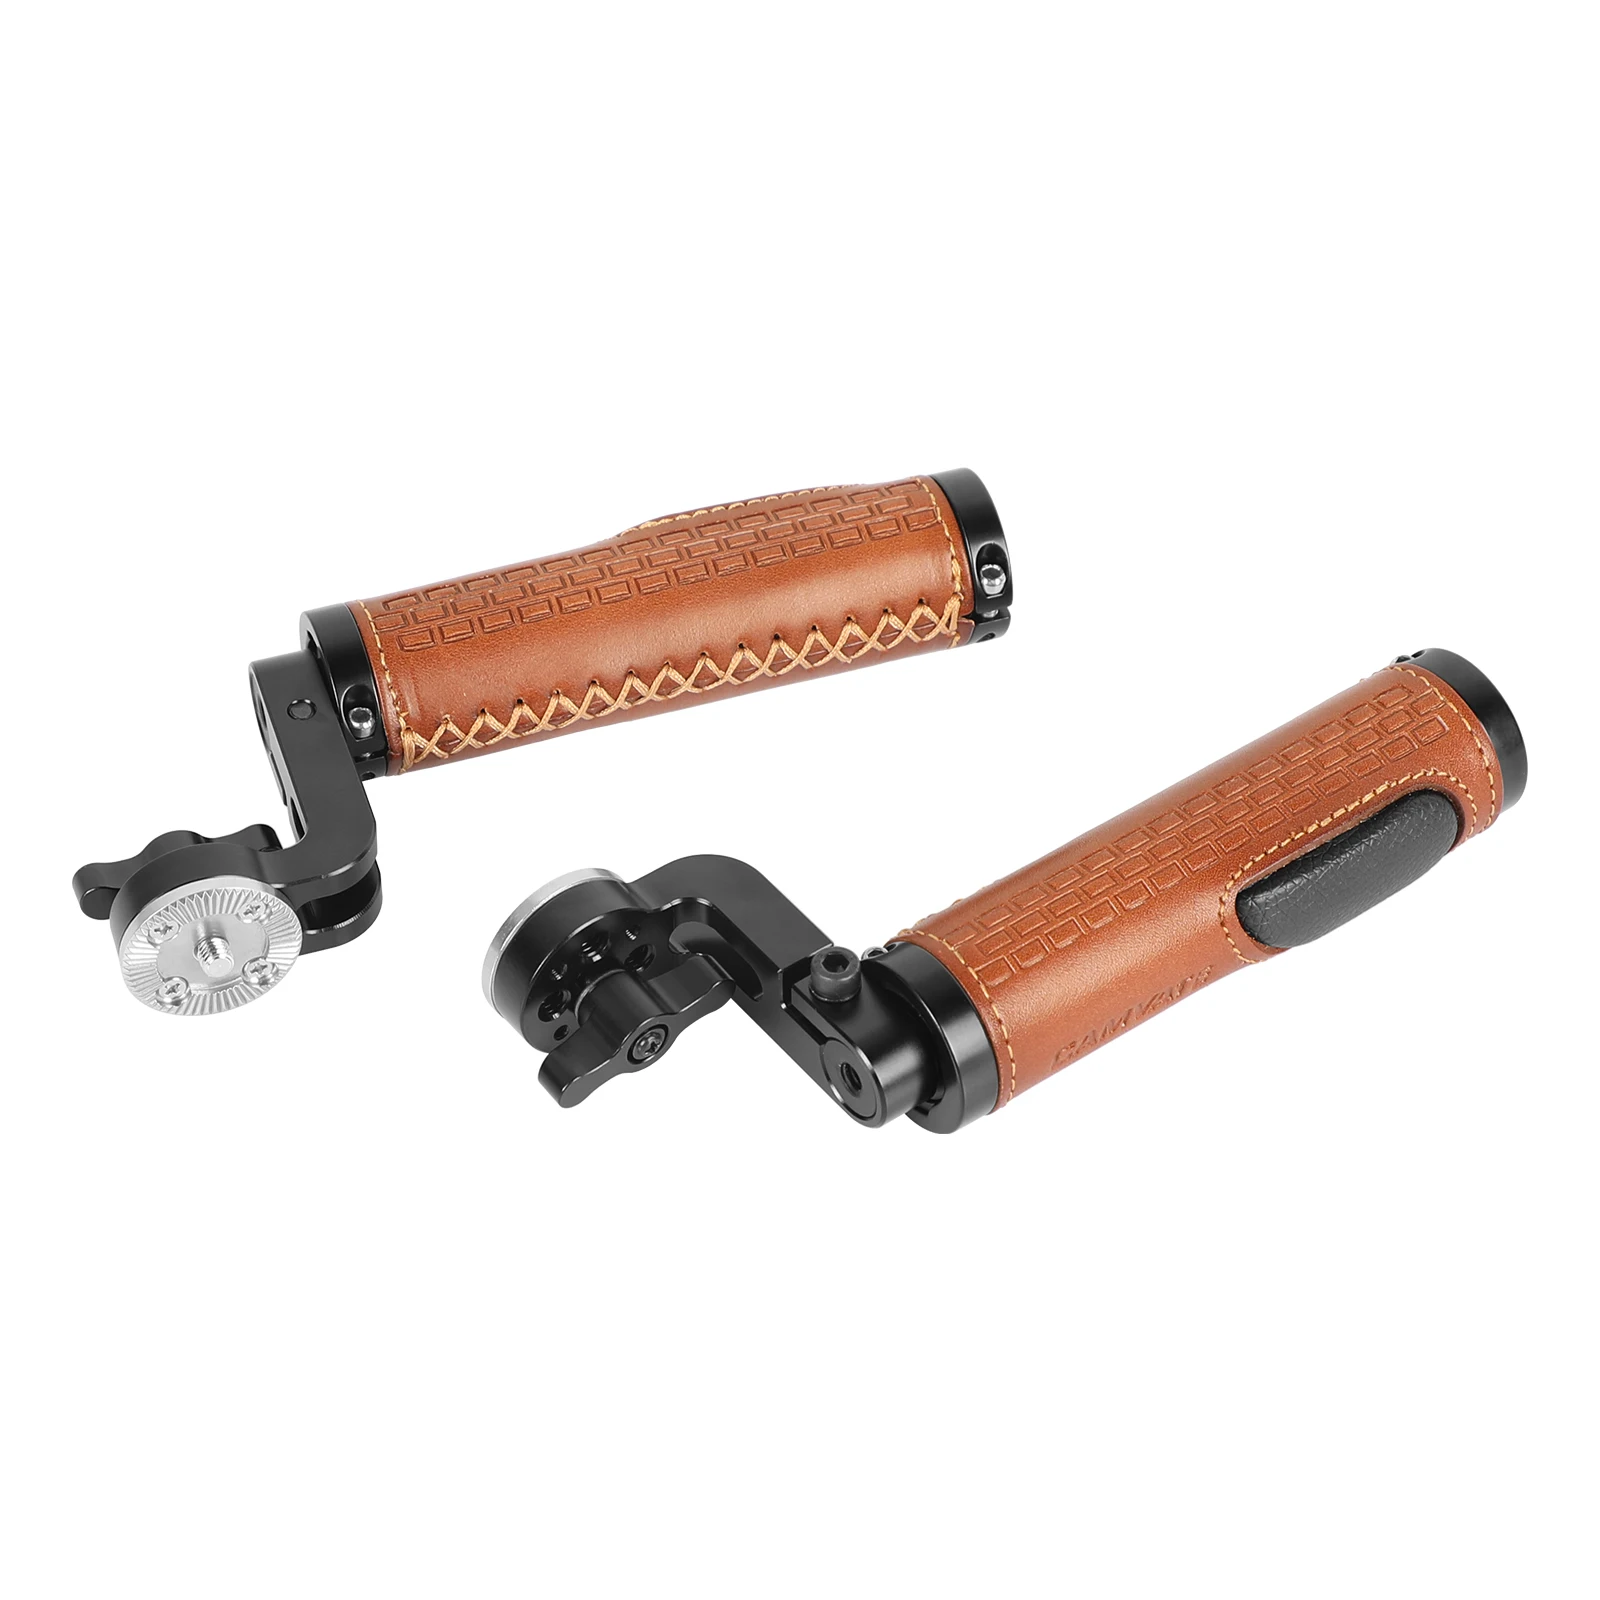 CAMVATE Leather ARRI Rosette Handgrip WIth Adjustable Knob M6 Male Threads Mount For DSLR Shoulder Rig Photography Accessories enlarge